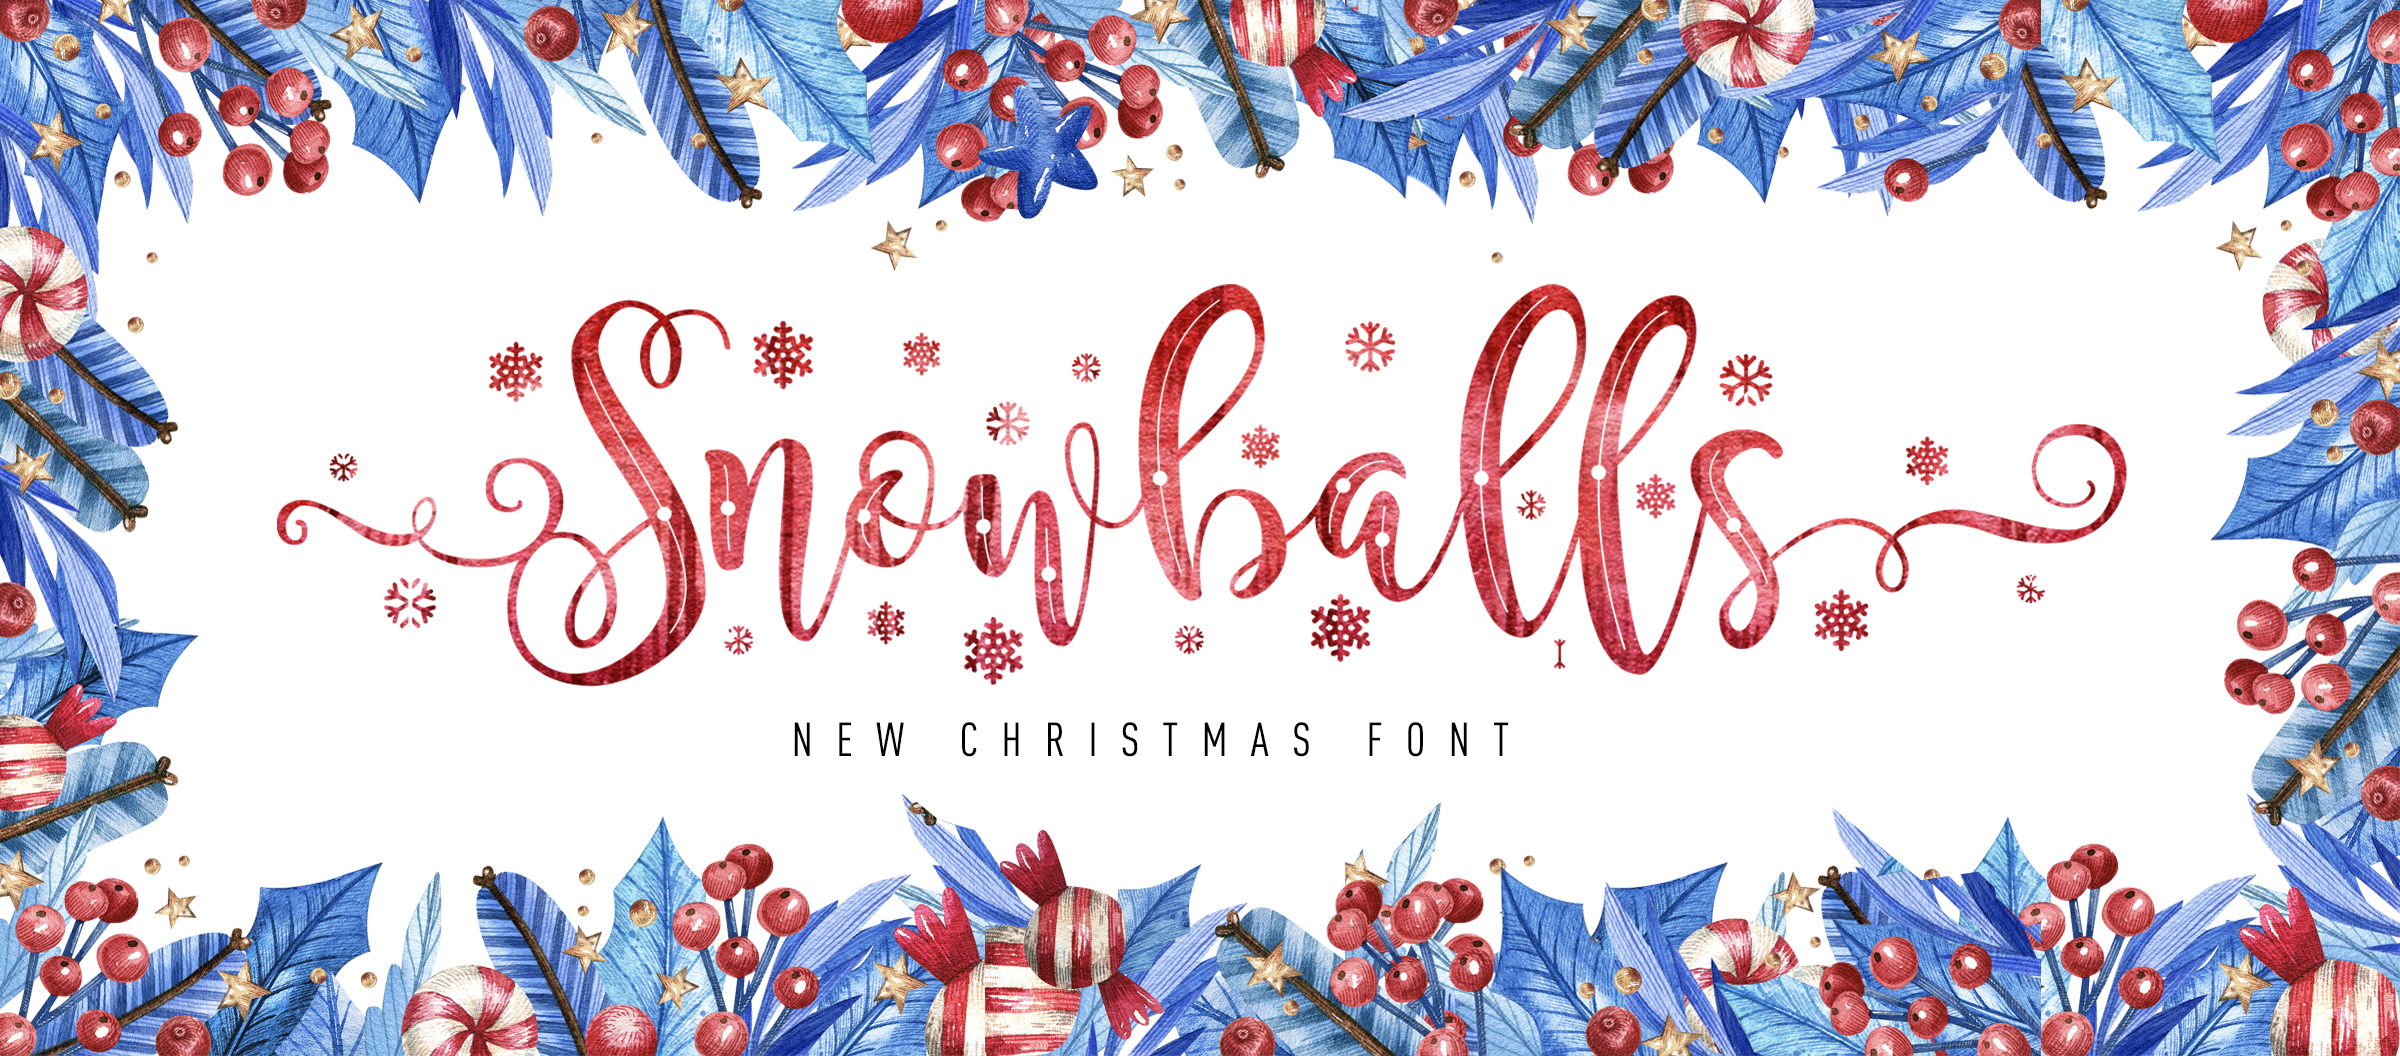 Snowballs Christmas Font